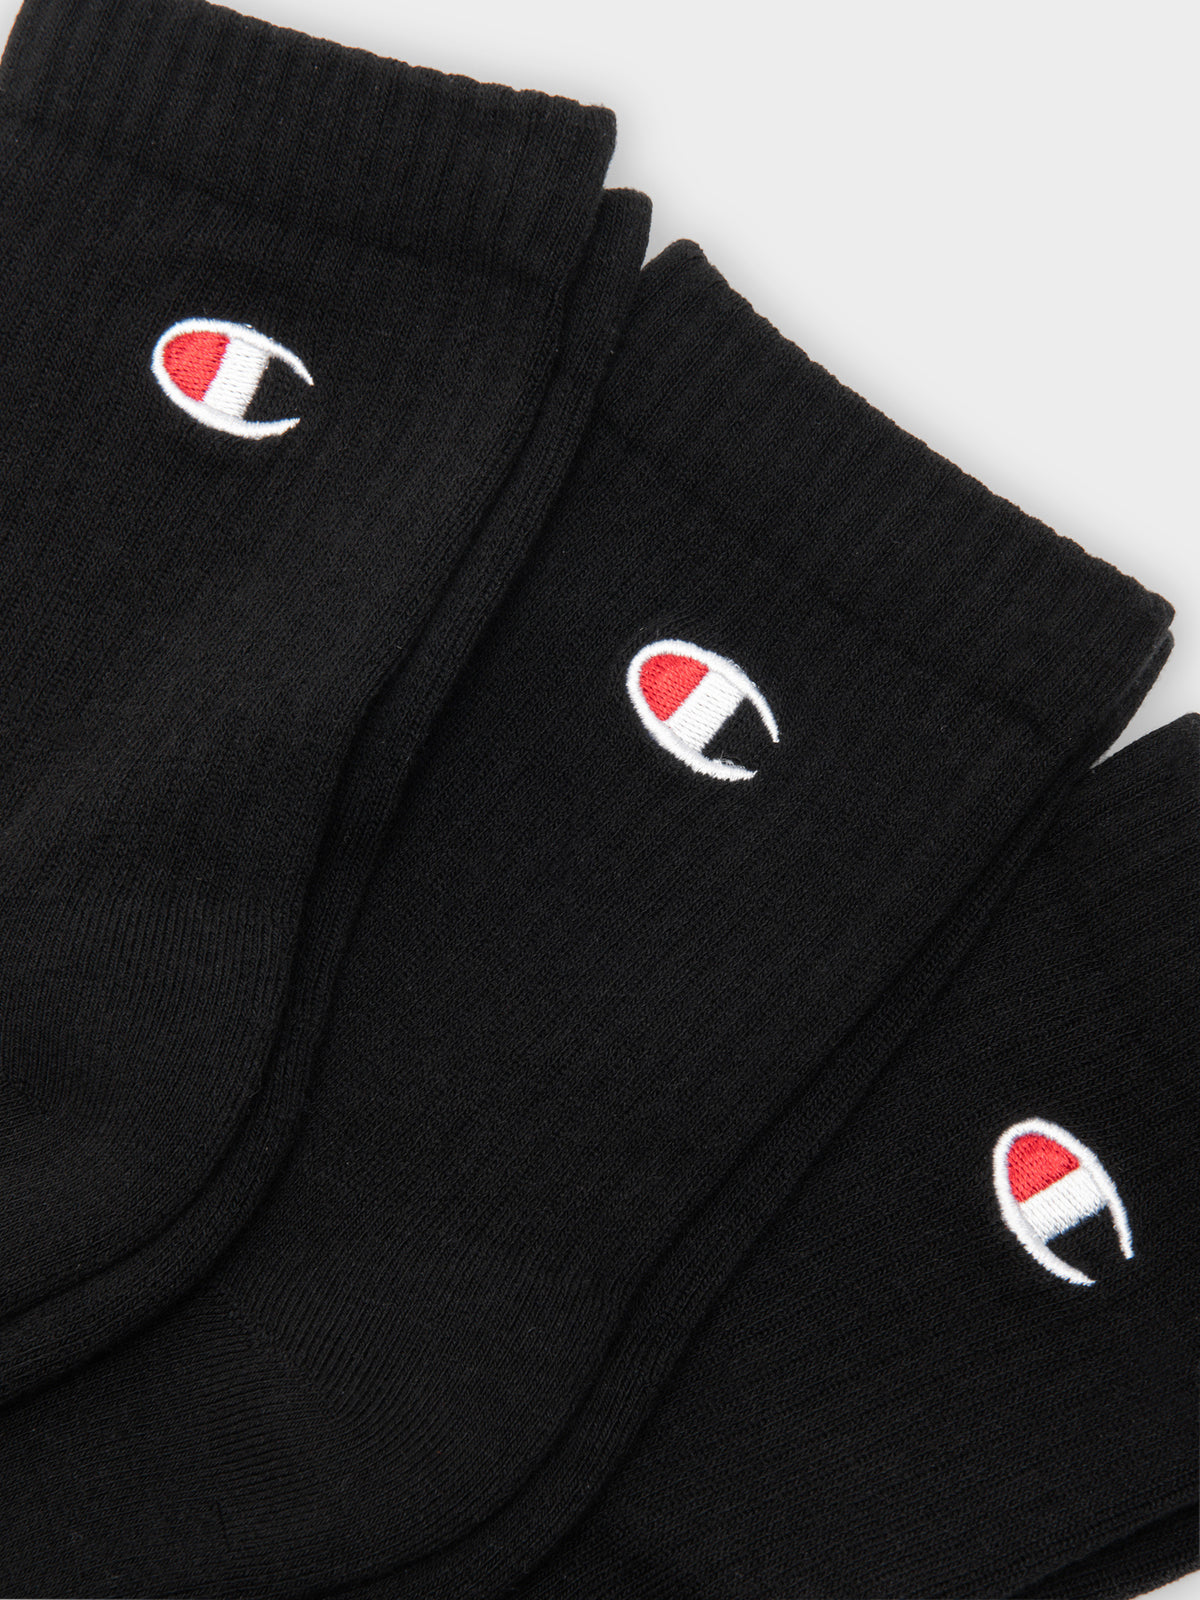 3 Pairs of Life Quarter-Length Crew Socks in Black